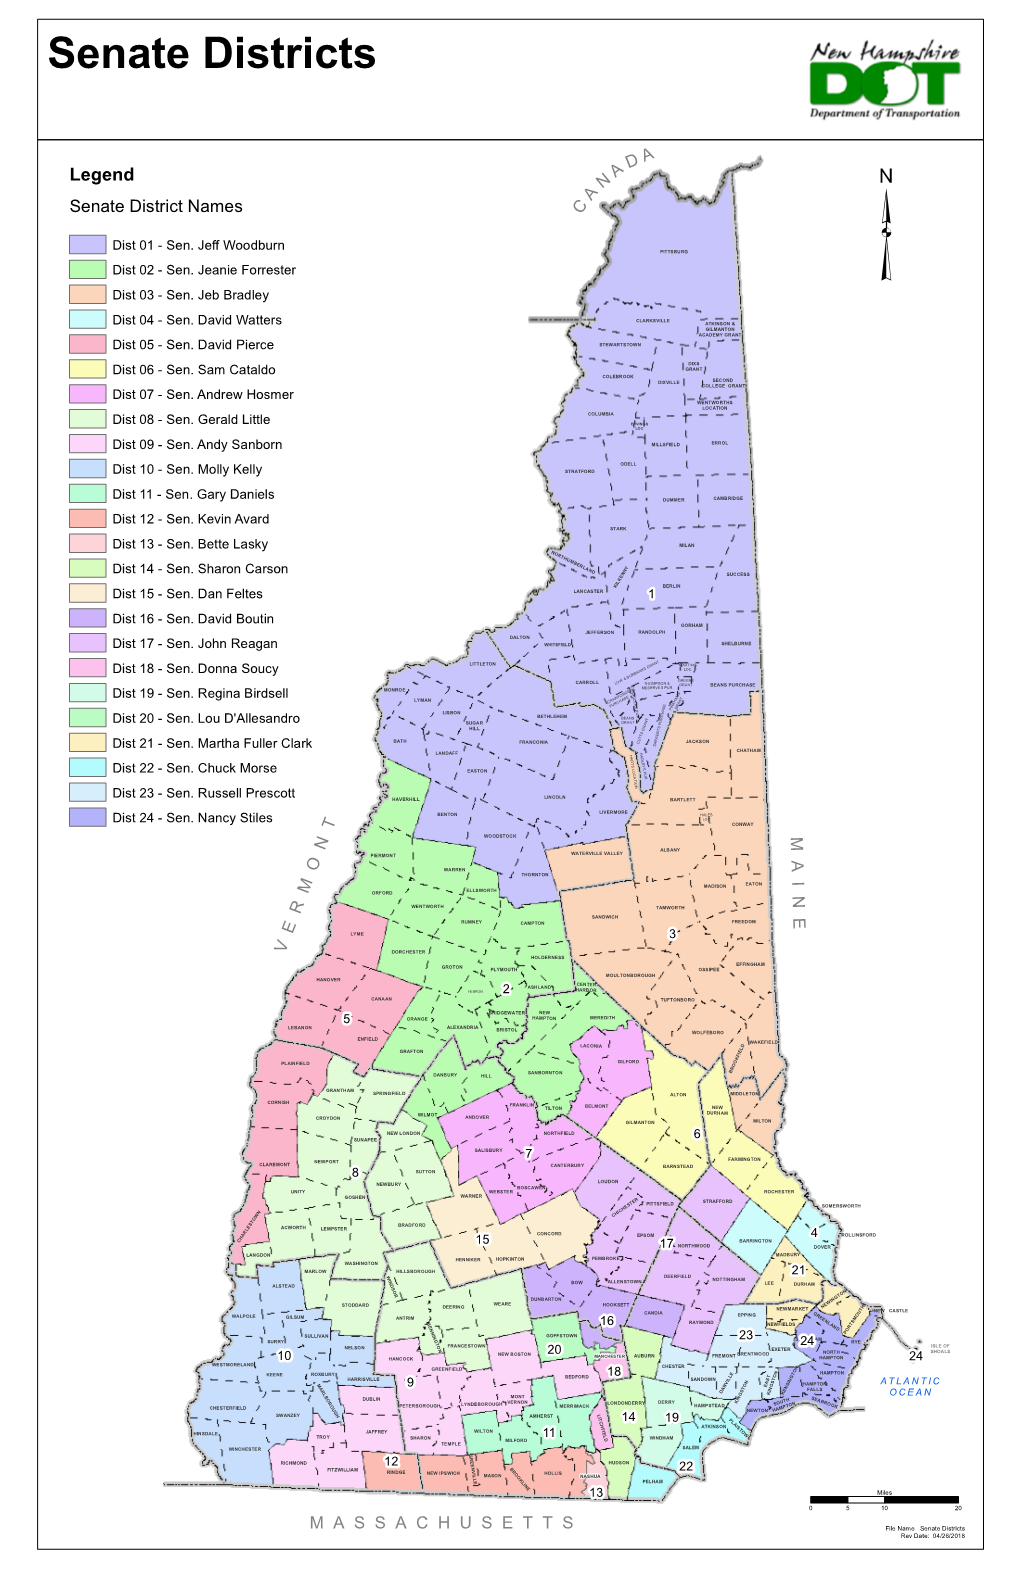 Senate Districts